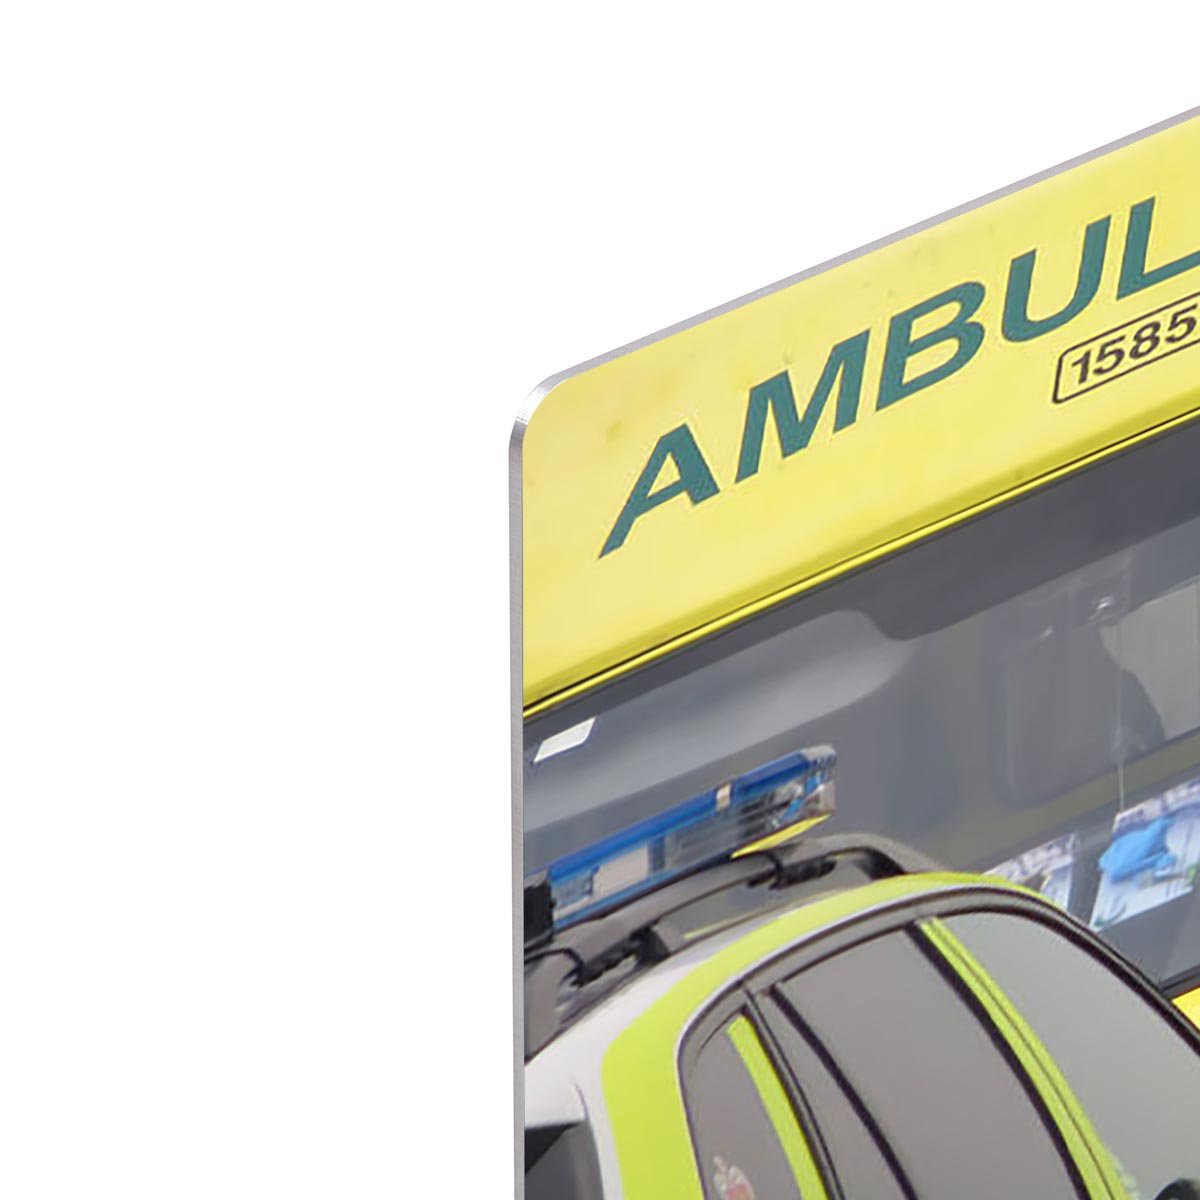 Ambulance and responder vehicles HD Metal Print